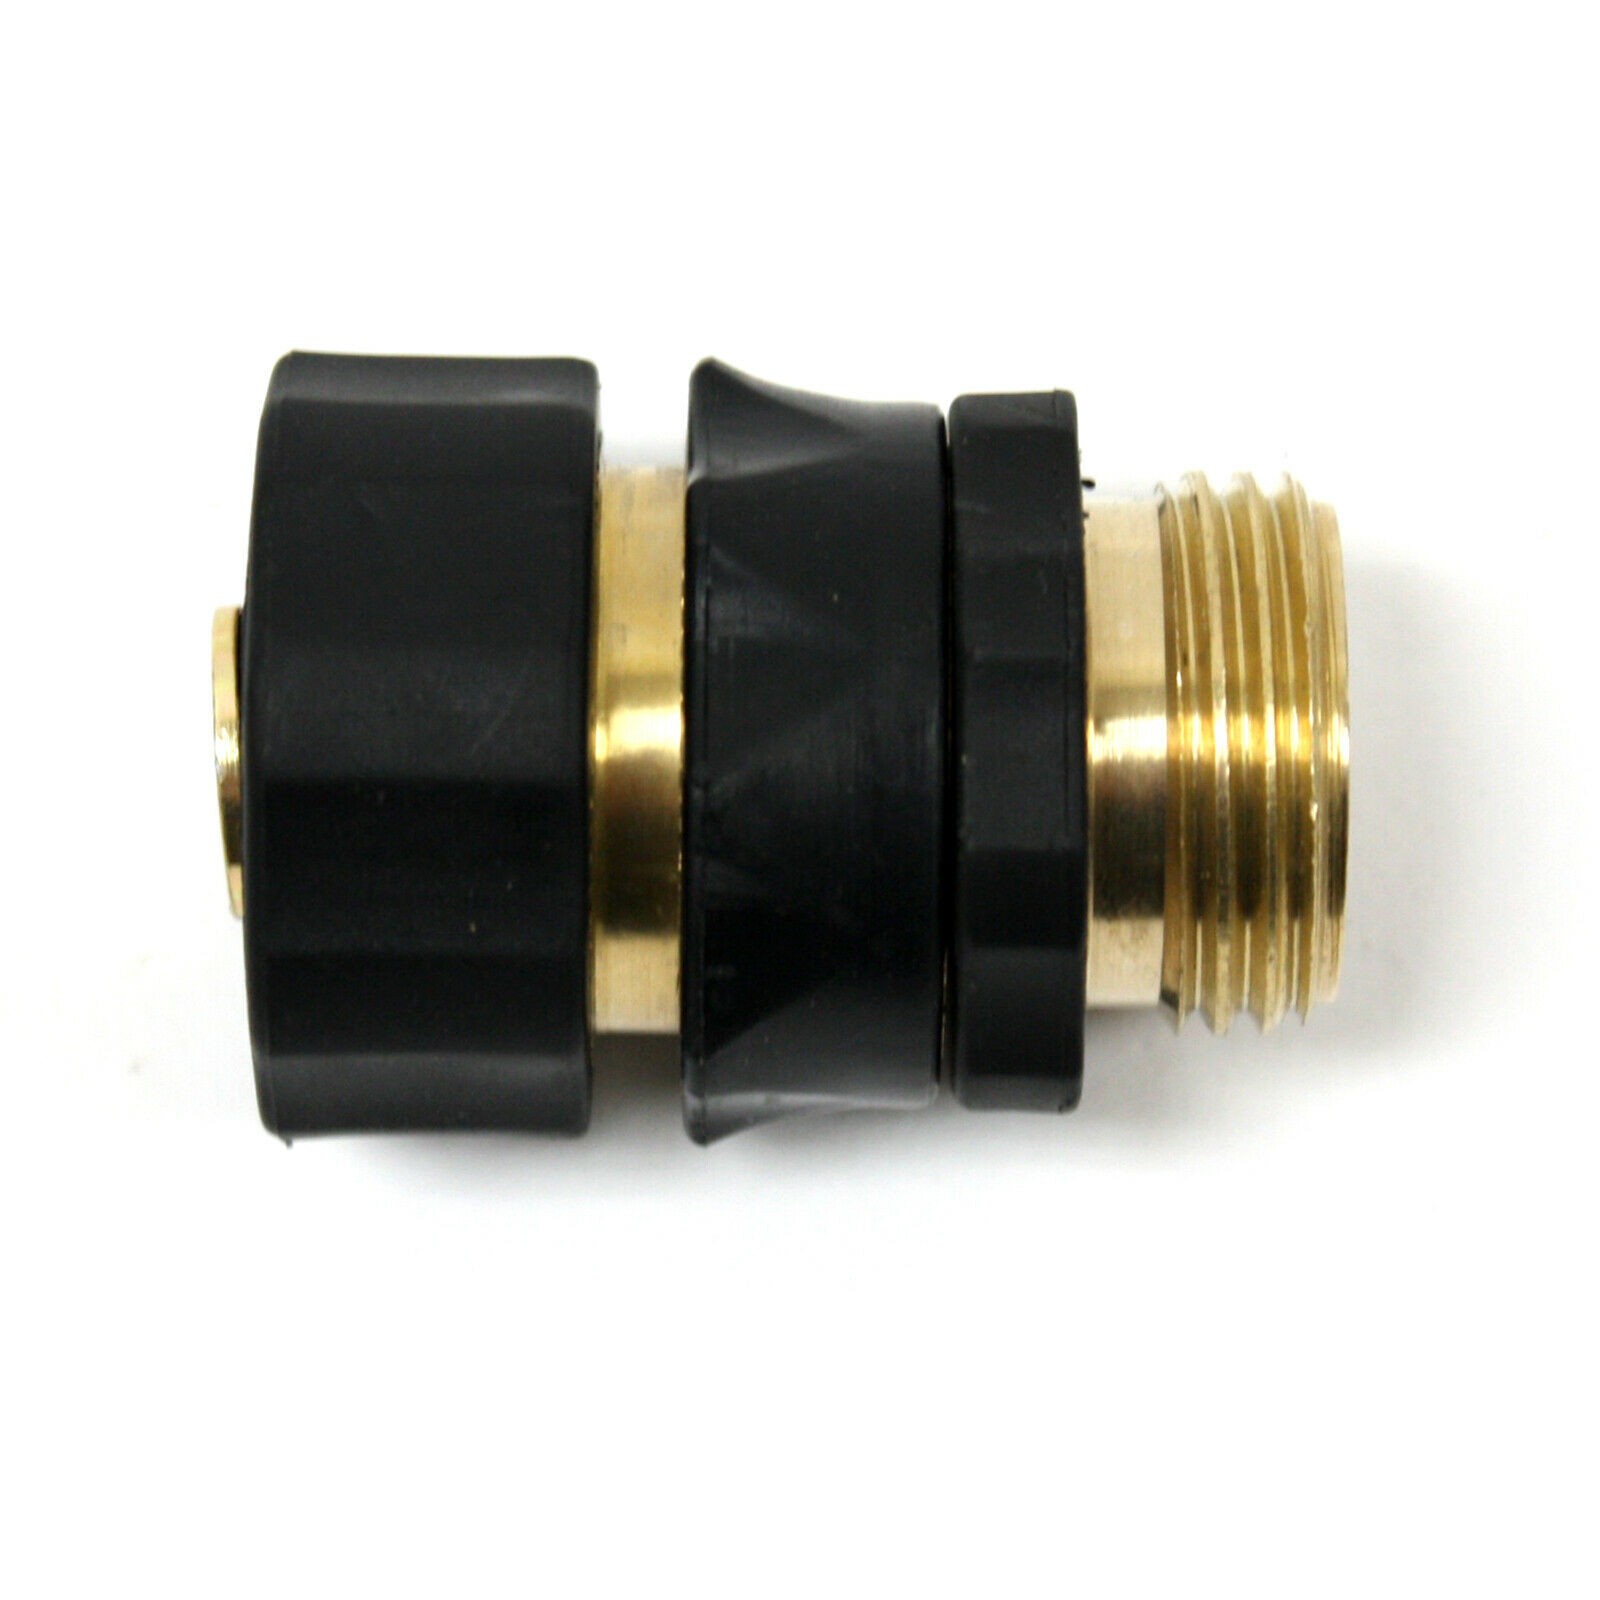 Marksman 70165C 3/4" Brass Threaded Tap Adaptor for sale online 